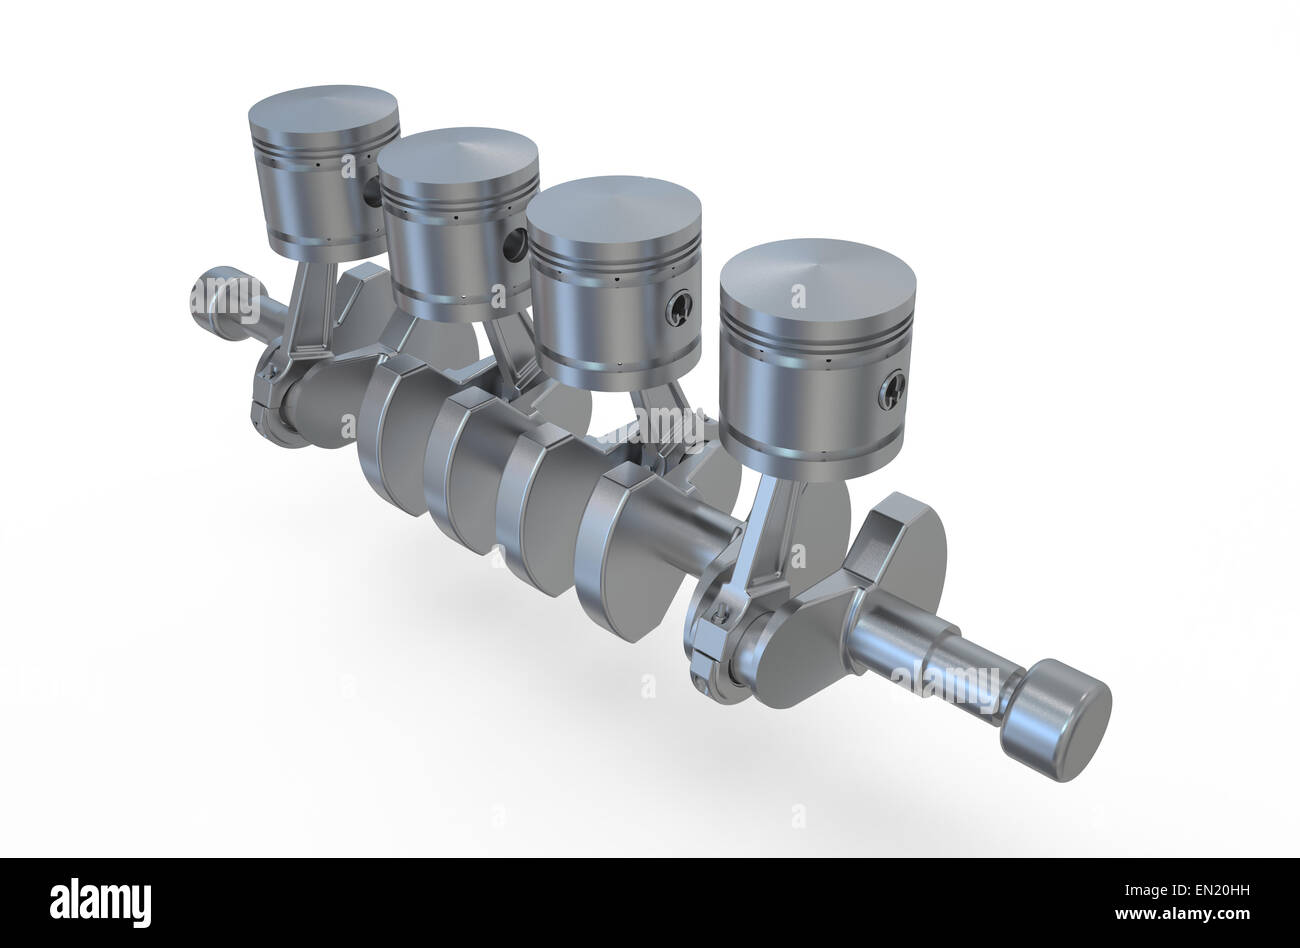 Kolben und Kurbelwelle. Vierzylinder-Motor. 3D Stockfotografie - Alamy